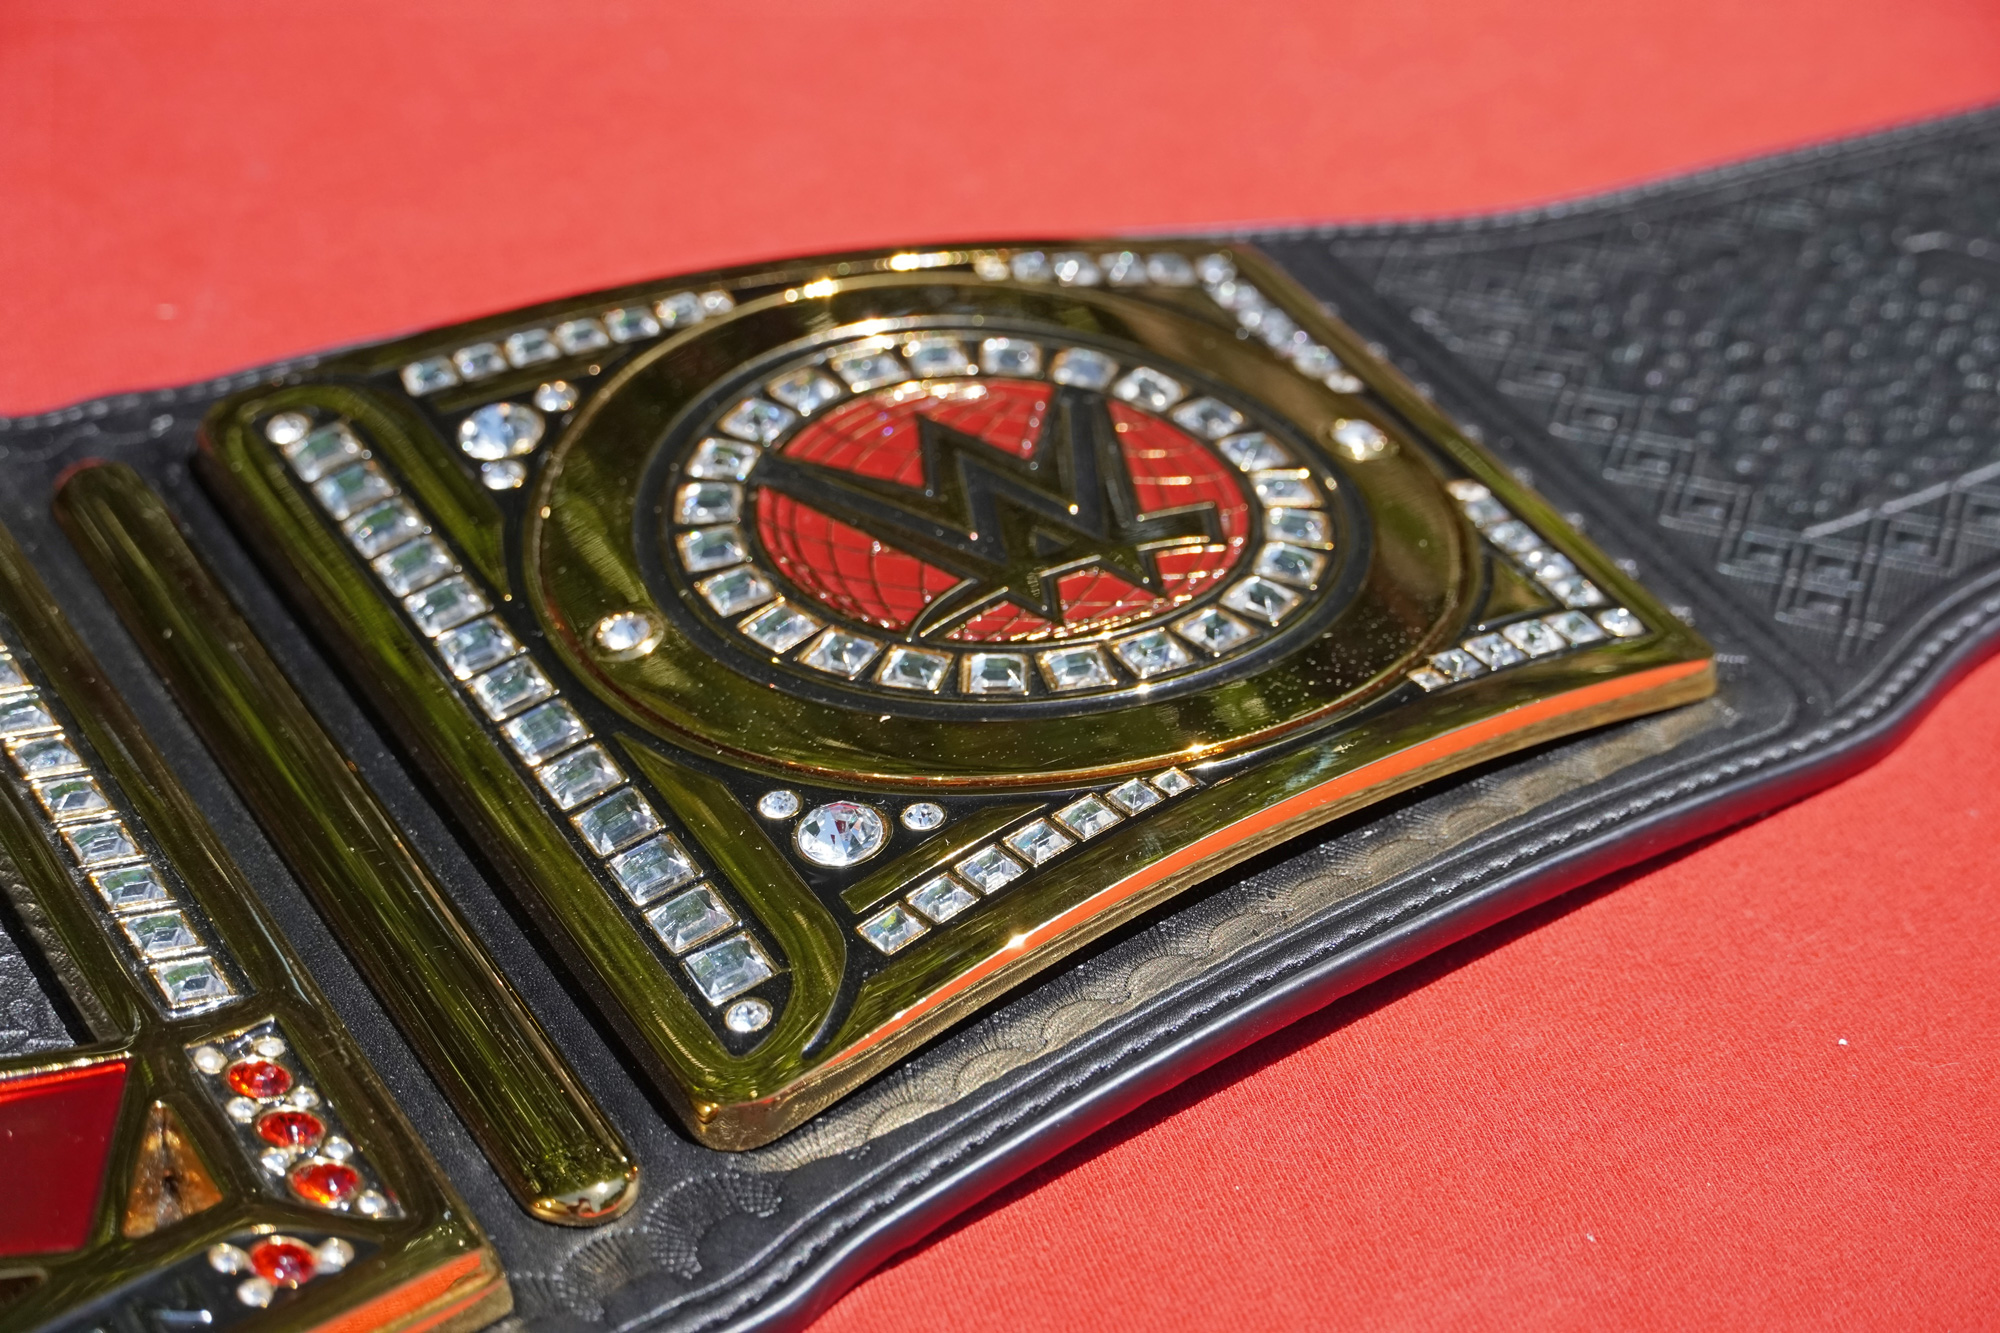 new wwe world heavyweight championship belt design